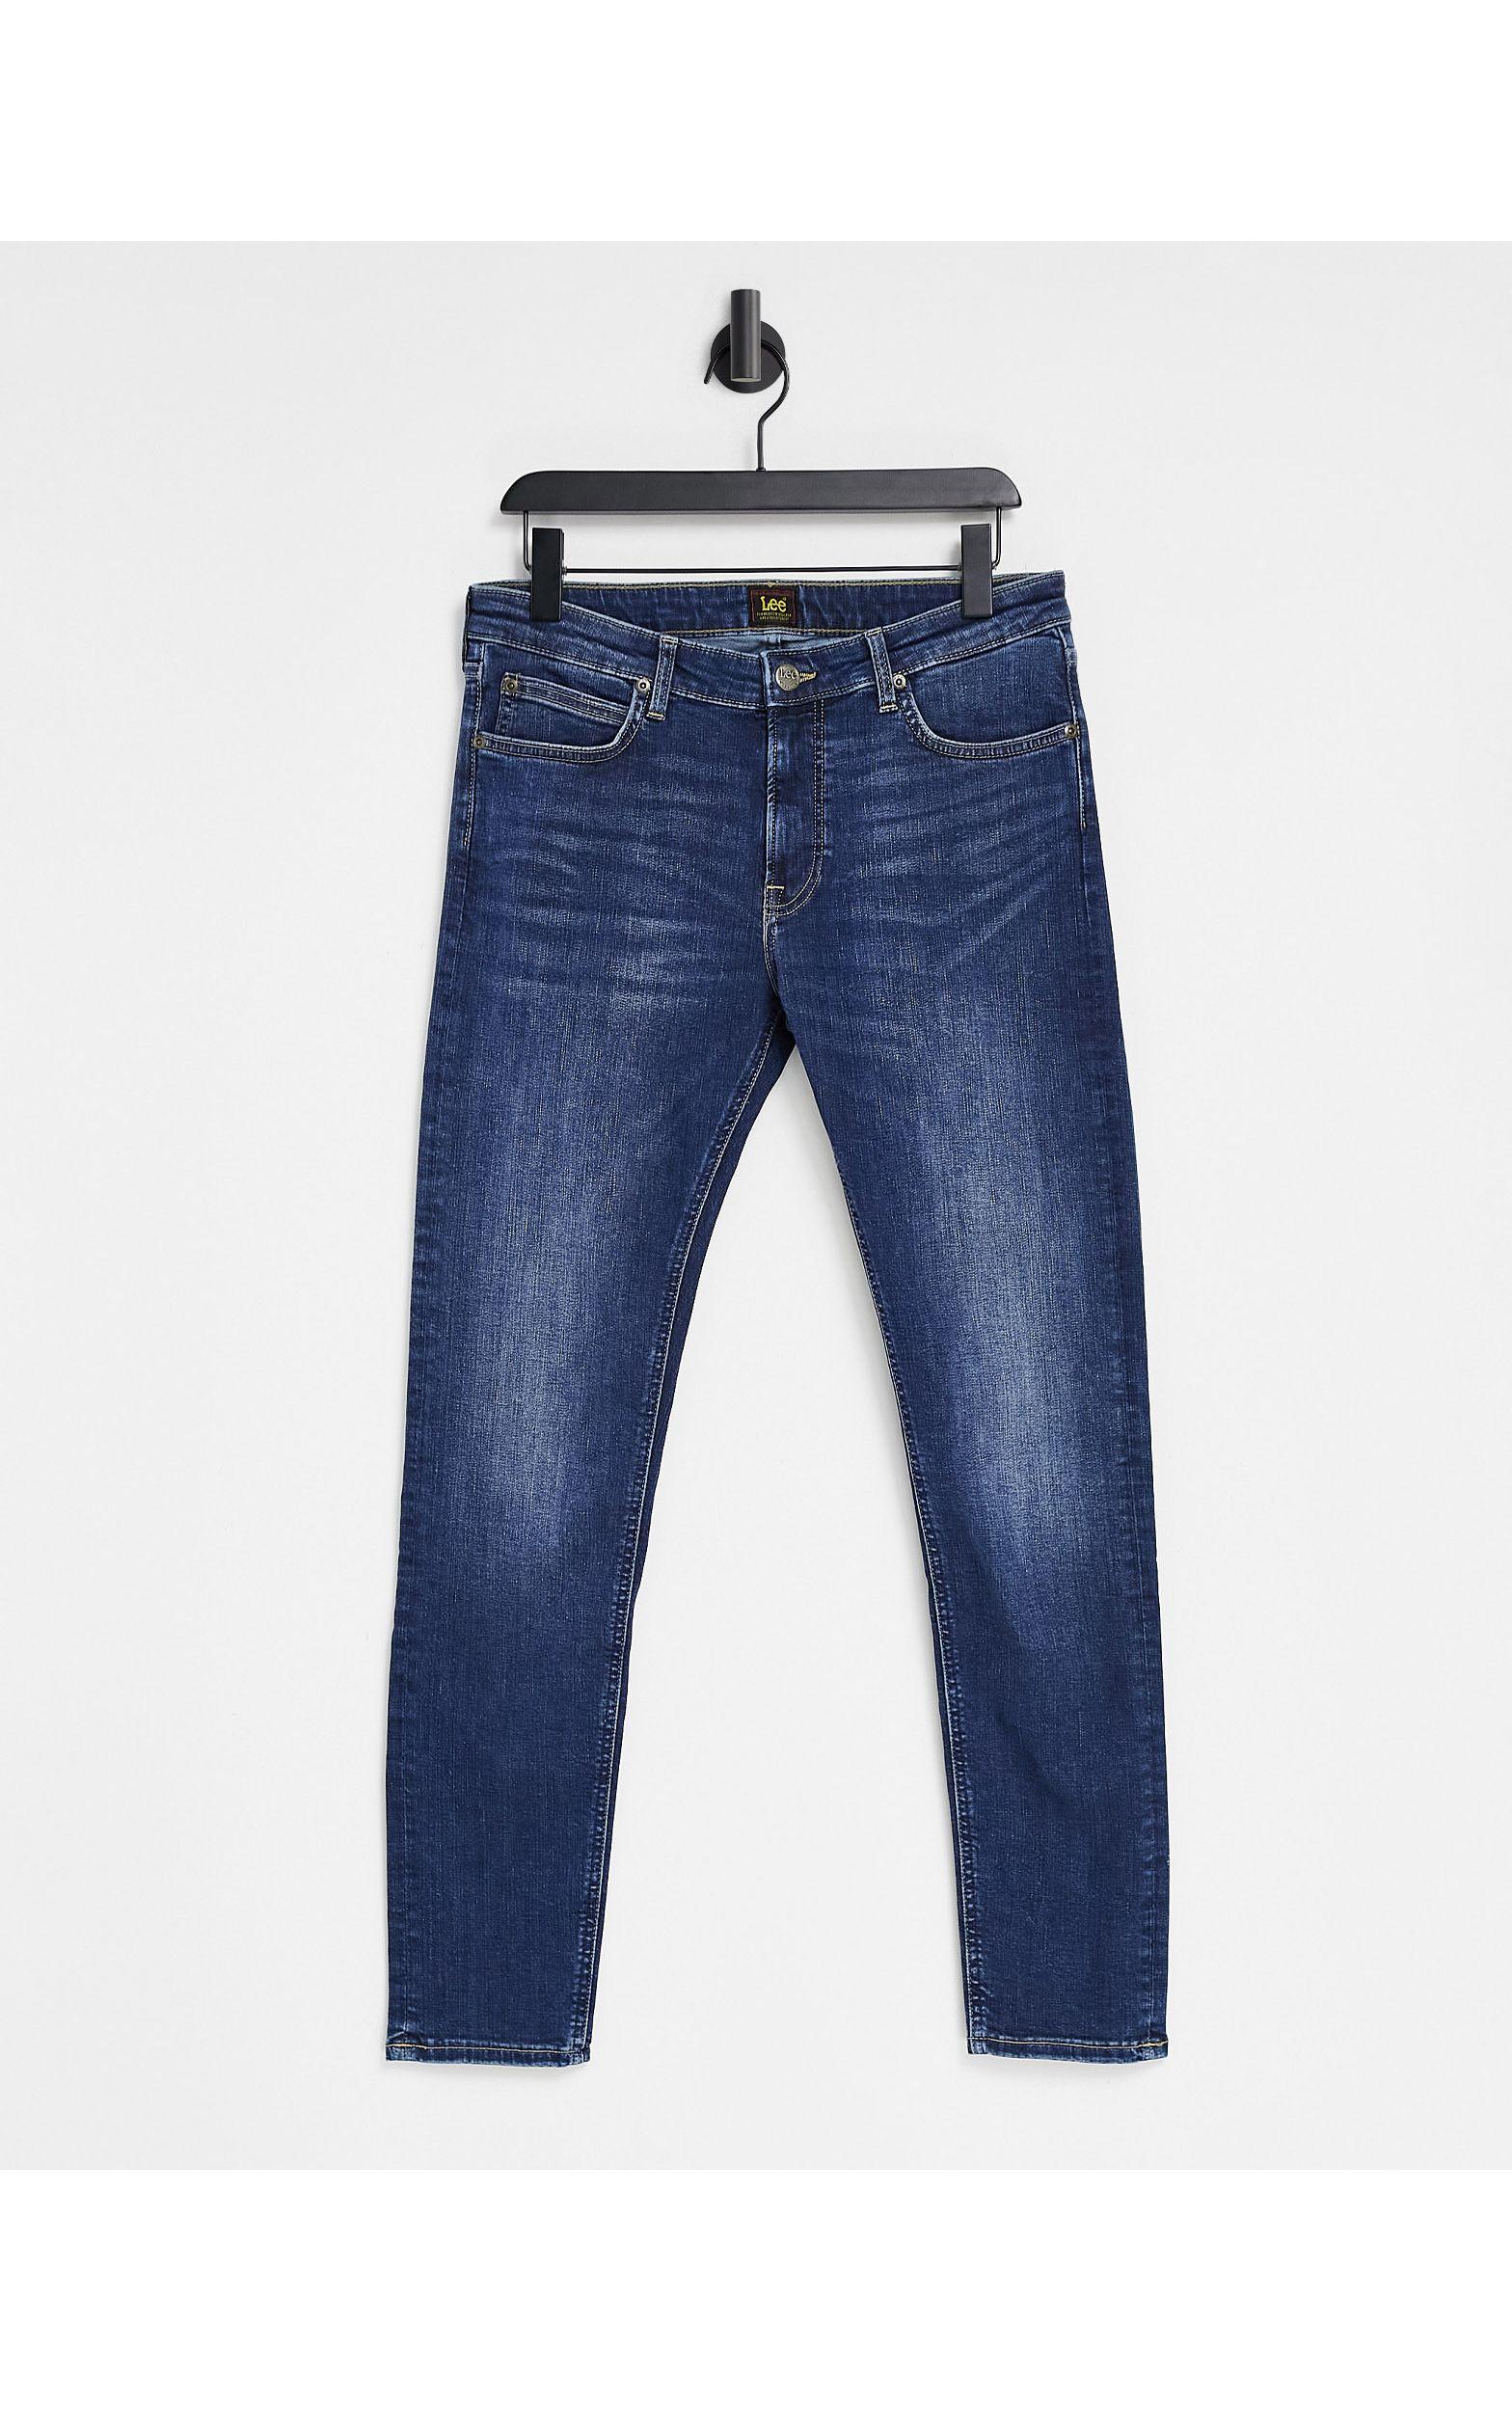 Lee Jeans Denim Malone Skinny Fit Jeans in Blue for Men - Lyst